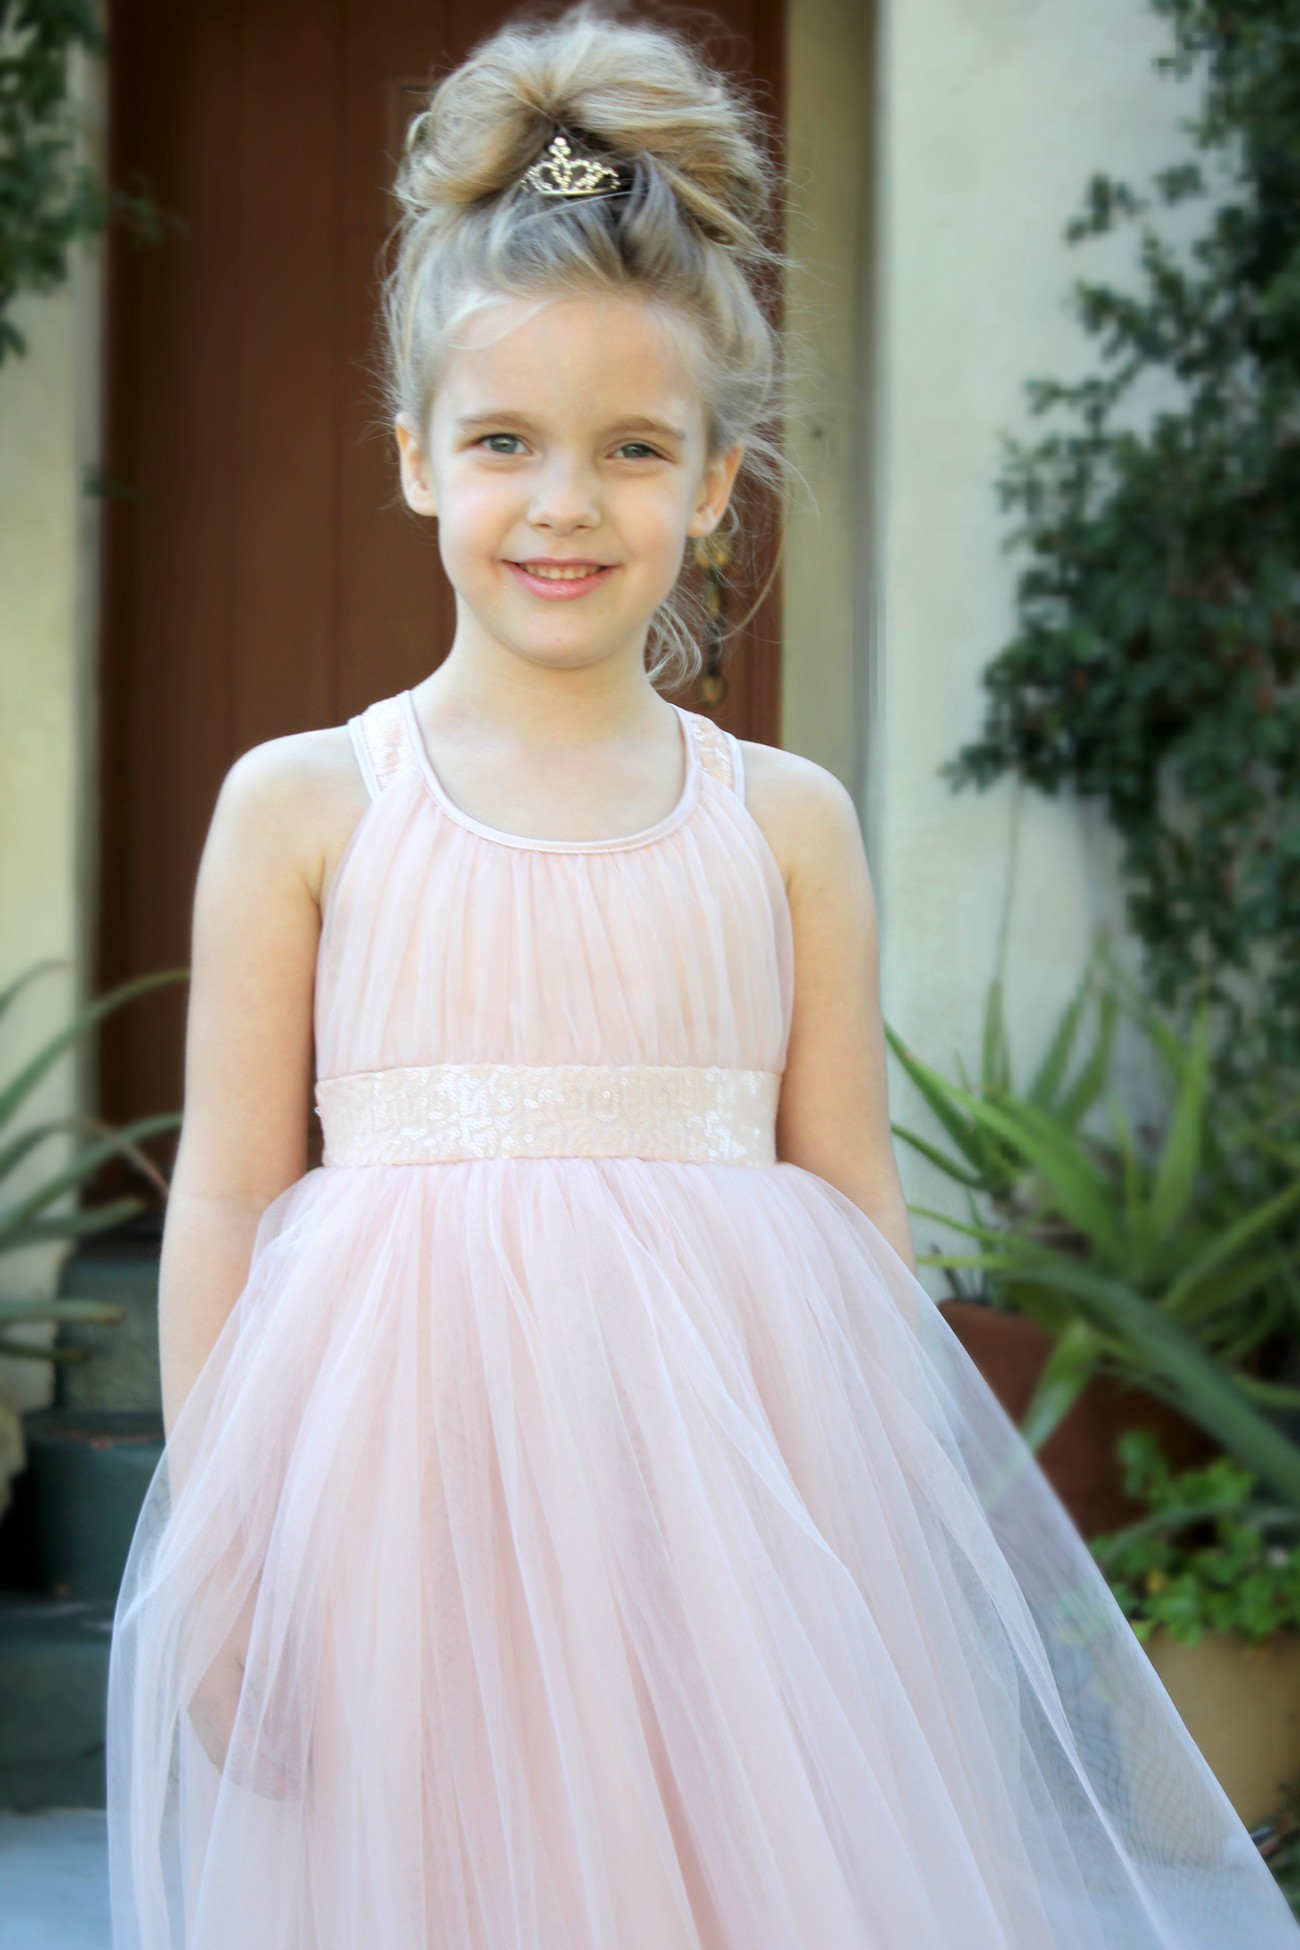 Blush Pink Sequin Tulle Dress Crossed Straps A-Line Flower Girl Dress 173